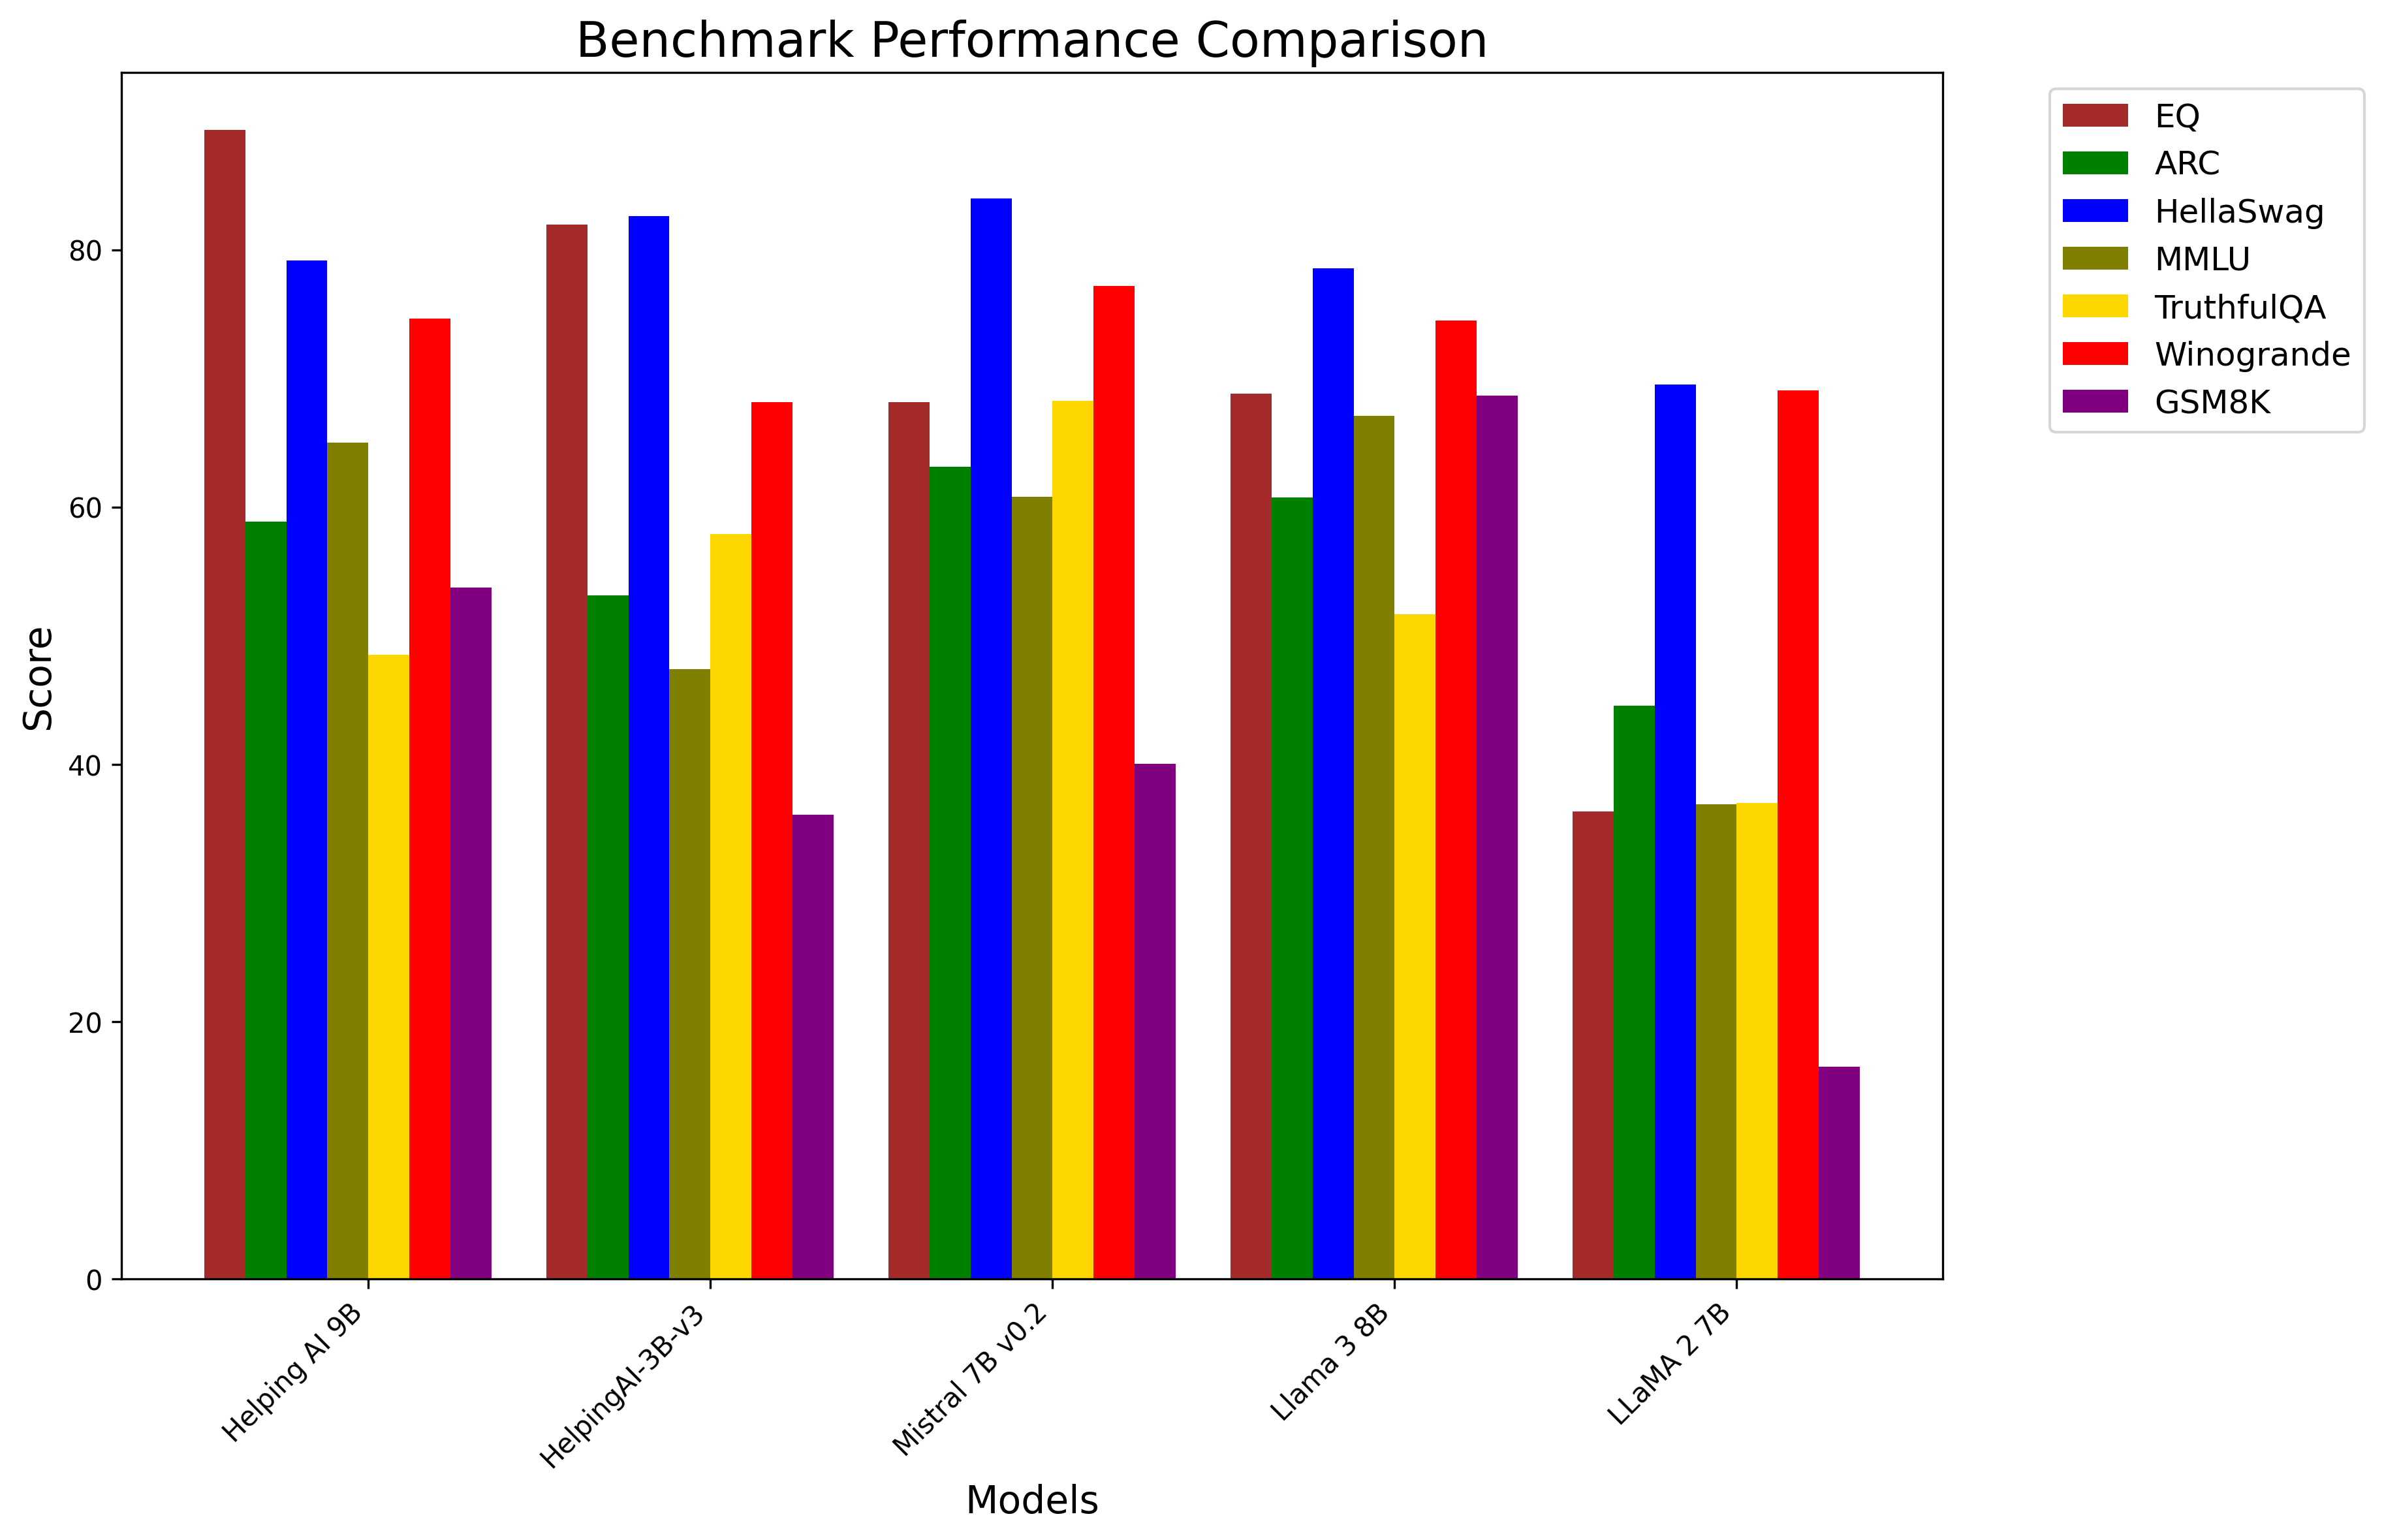 benchmarks